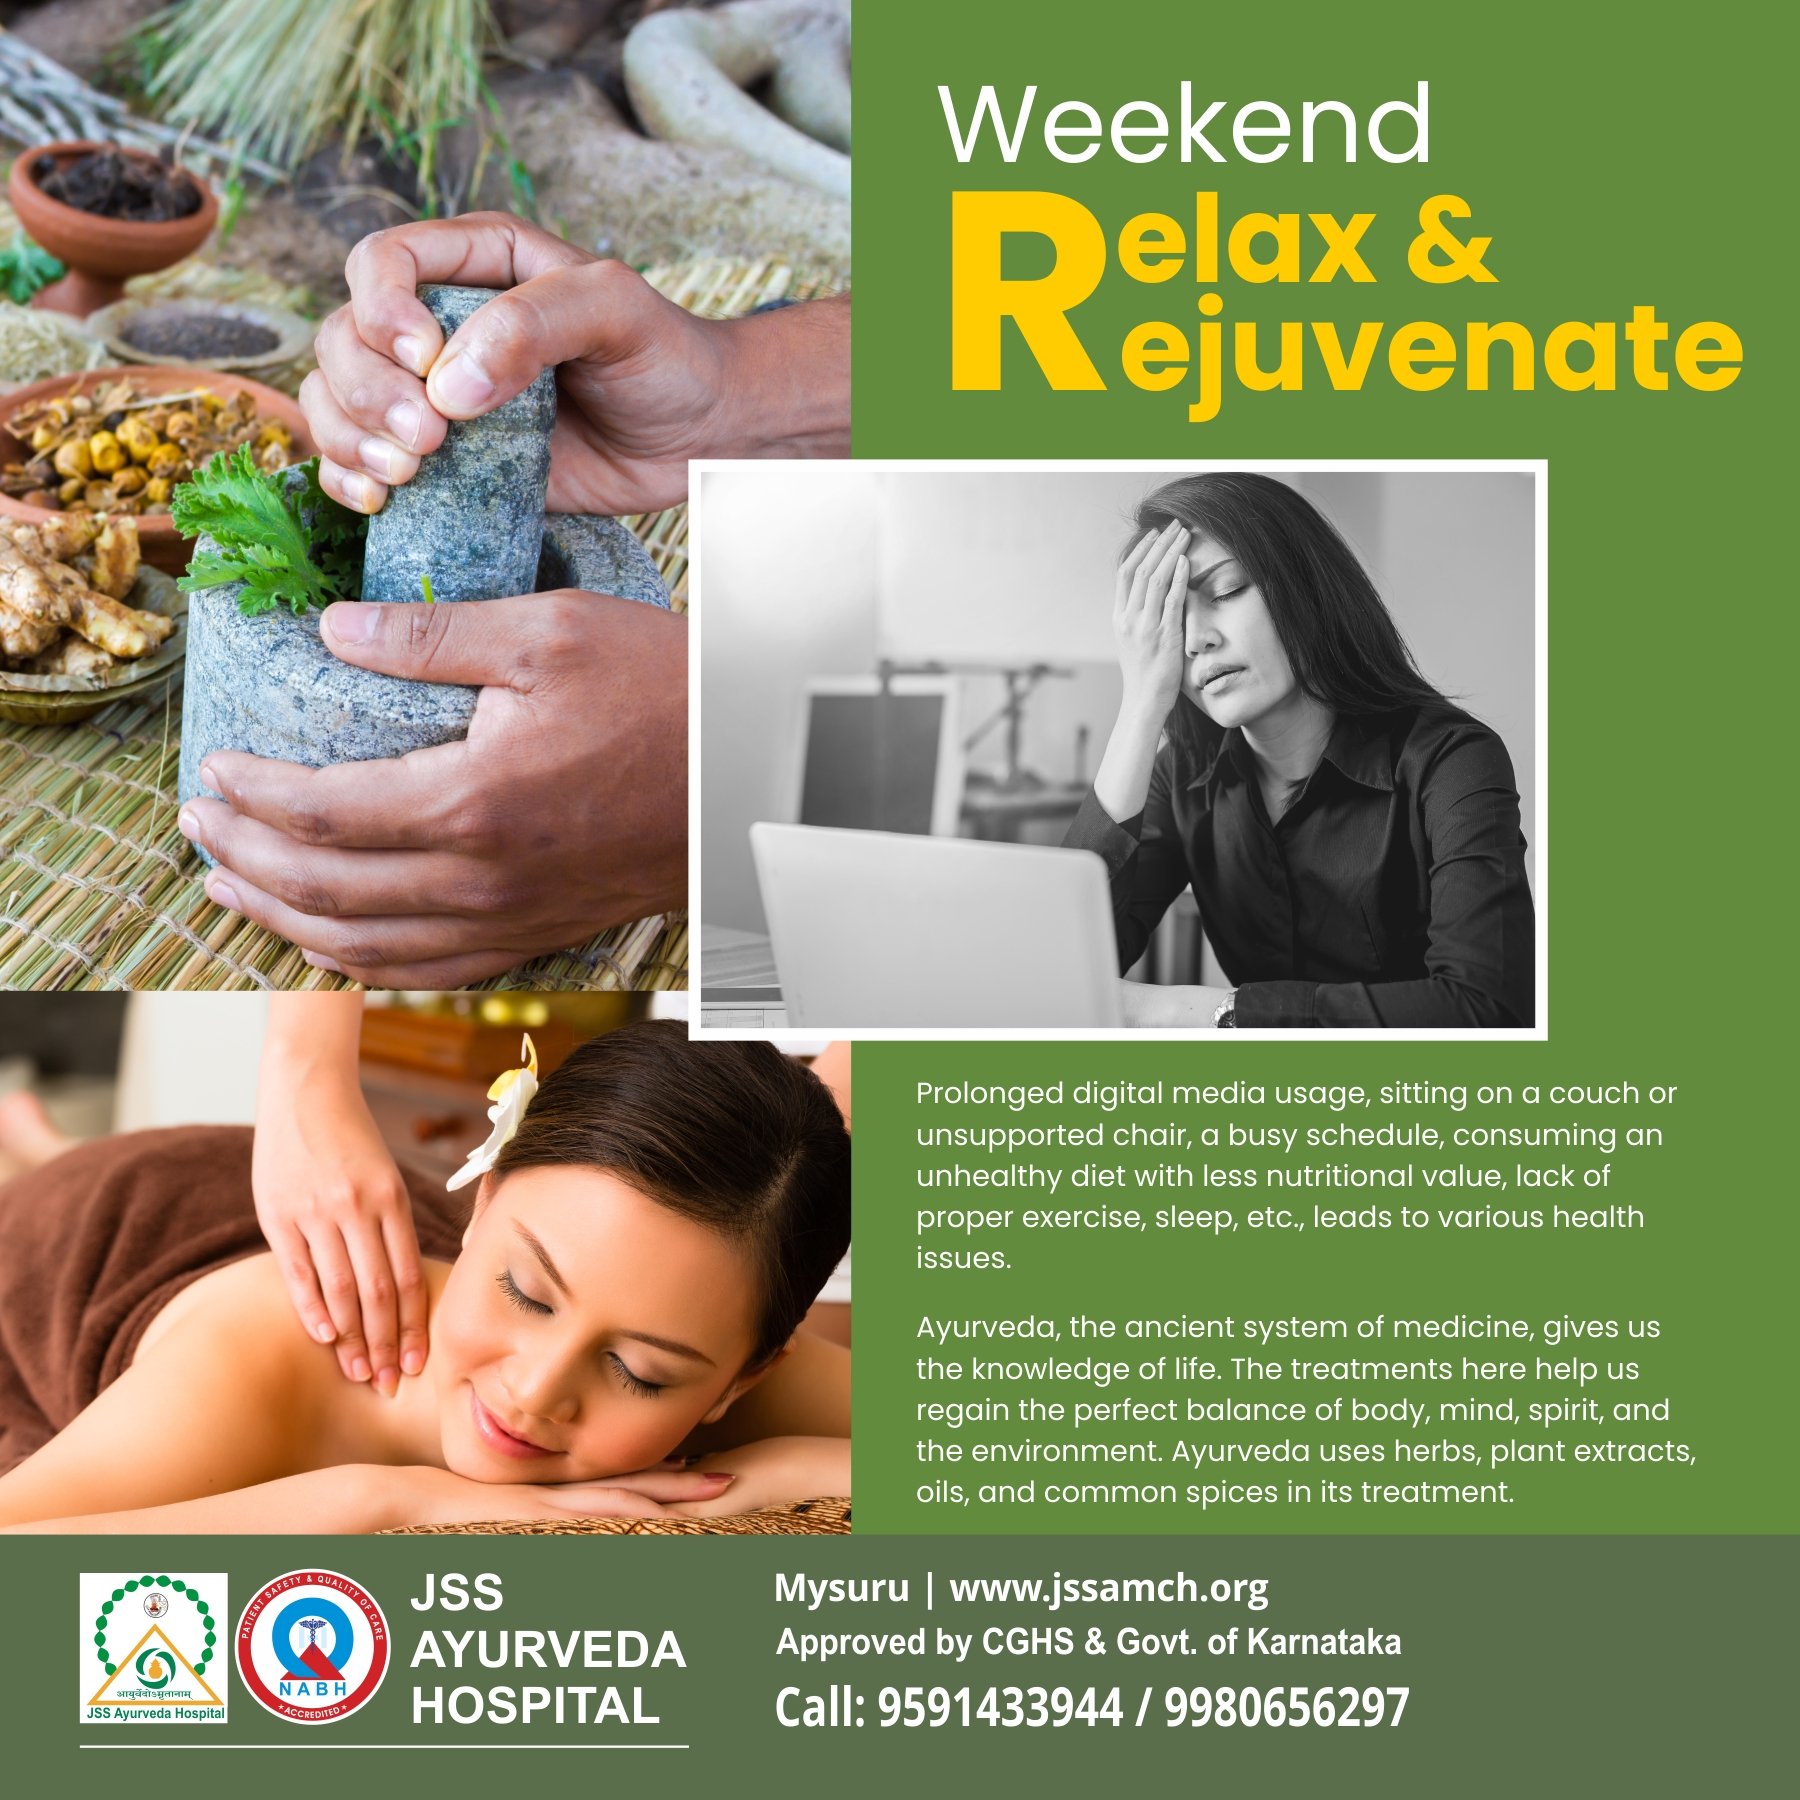 JSS Ayurveda Hospital - Weekend – Relax & Rejuvenate